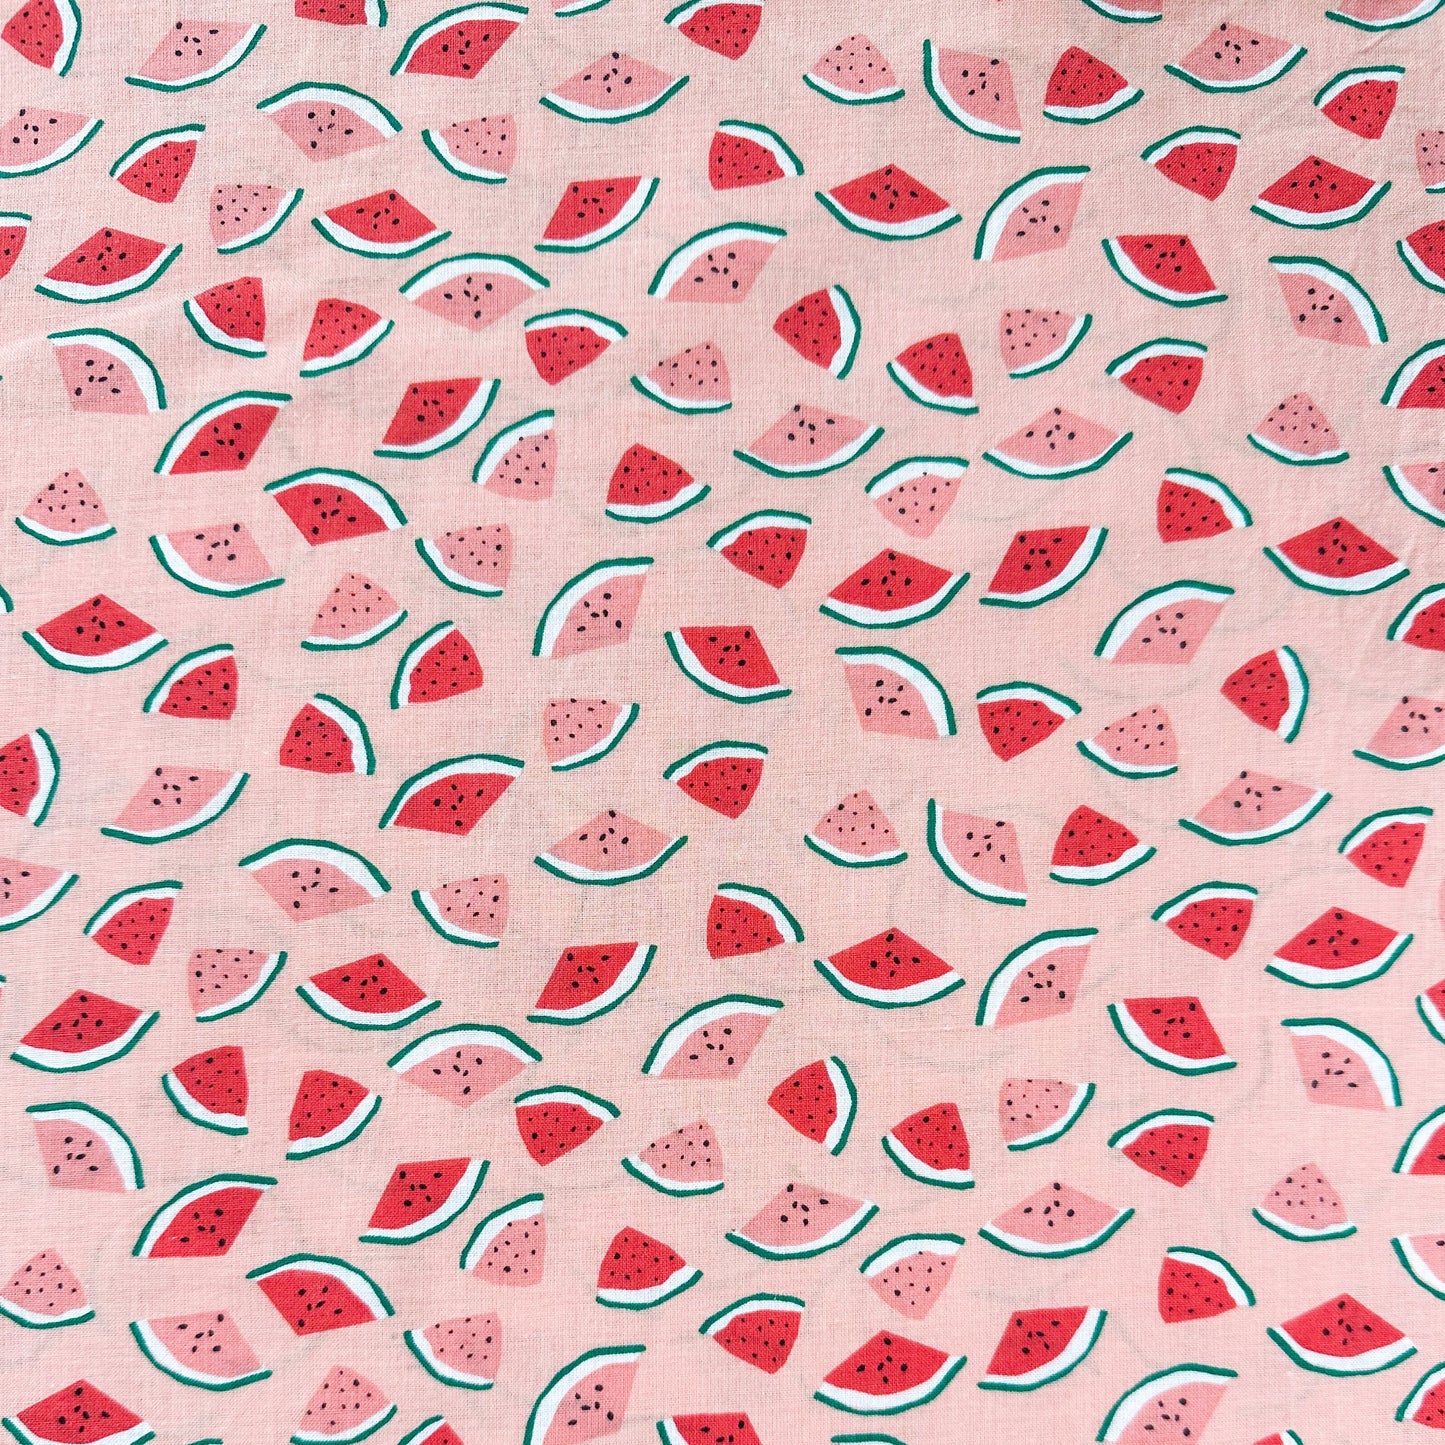 Reusable Cloth Pantyliner – reds & pinks